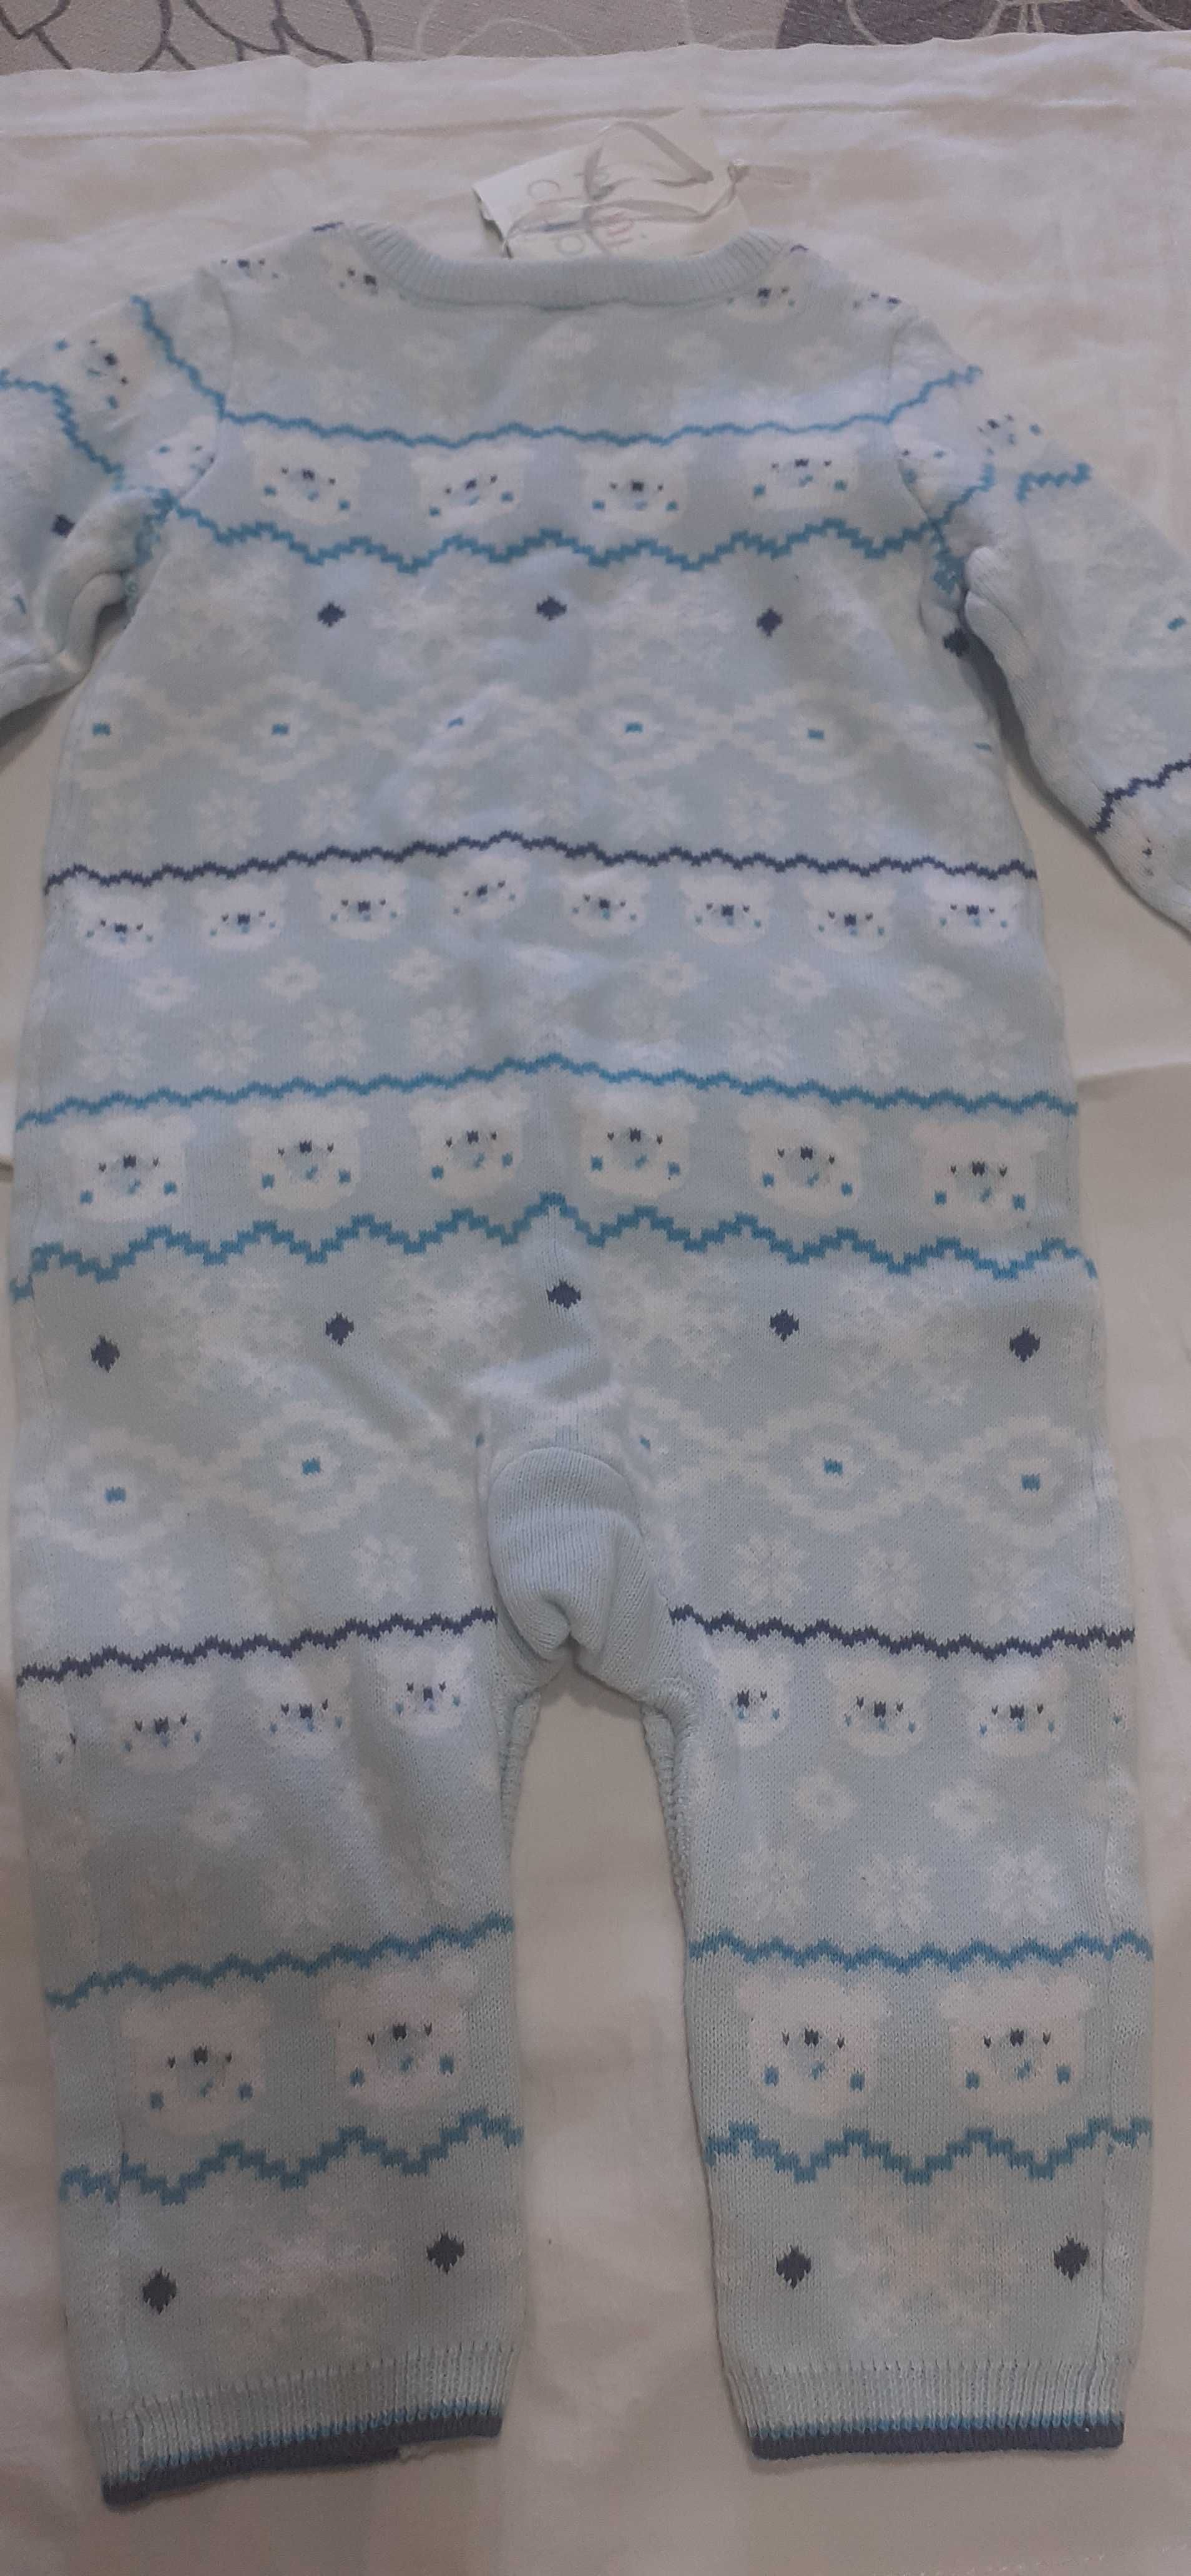 Vand salopeta tricotata pentru bebe 3/6 luni,moale si foarte practica